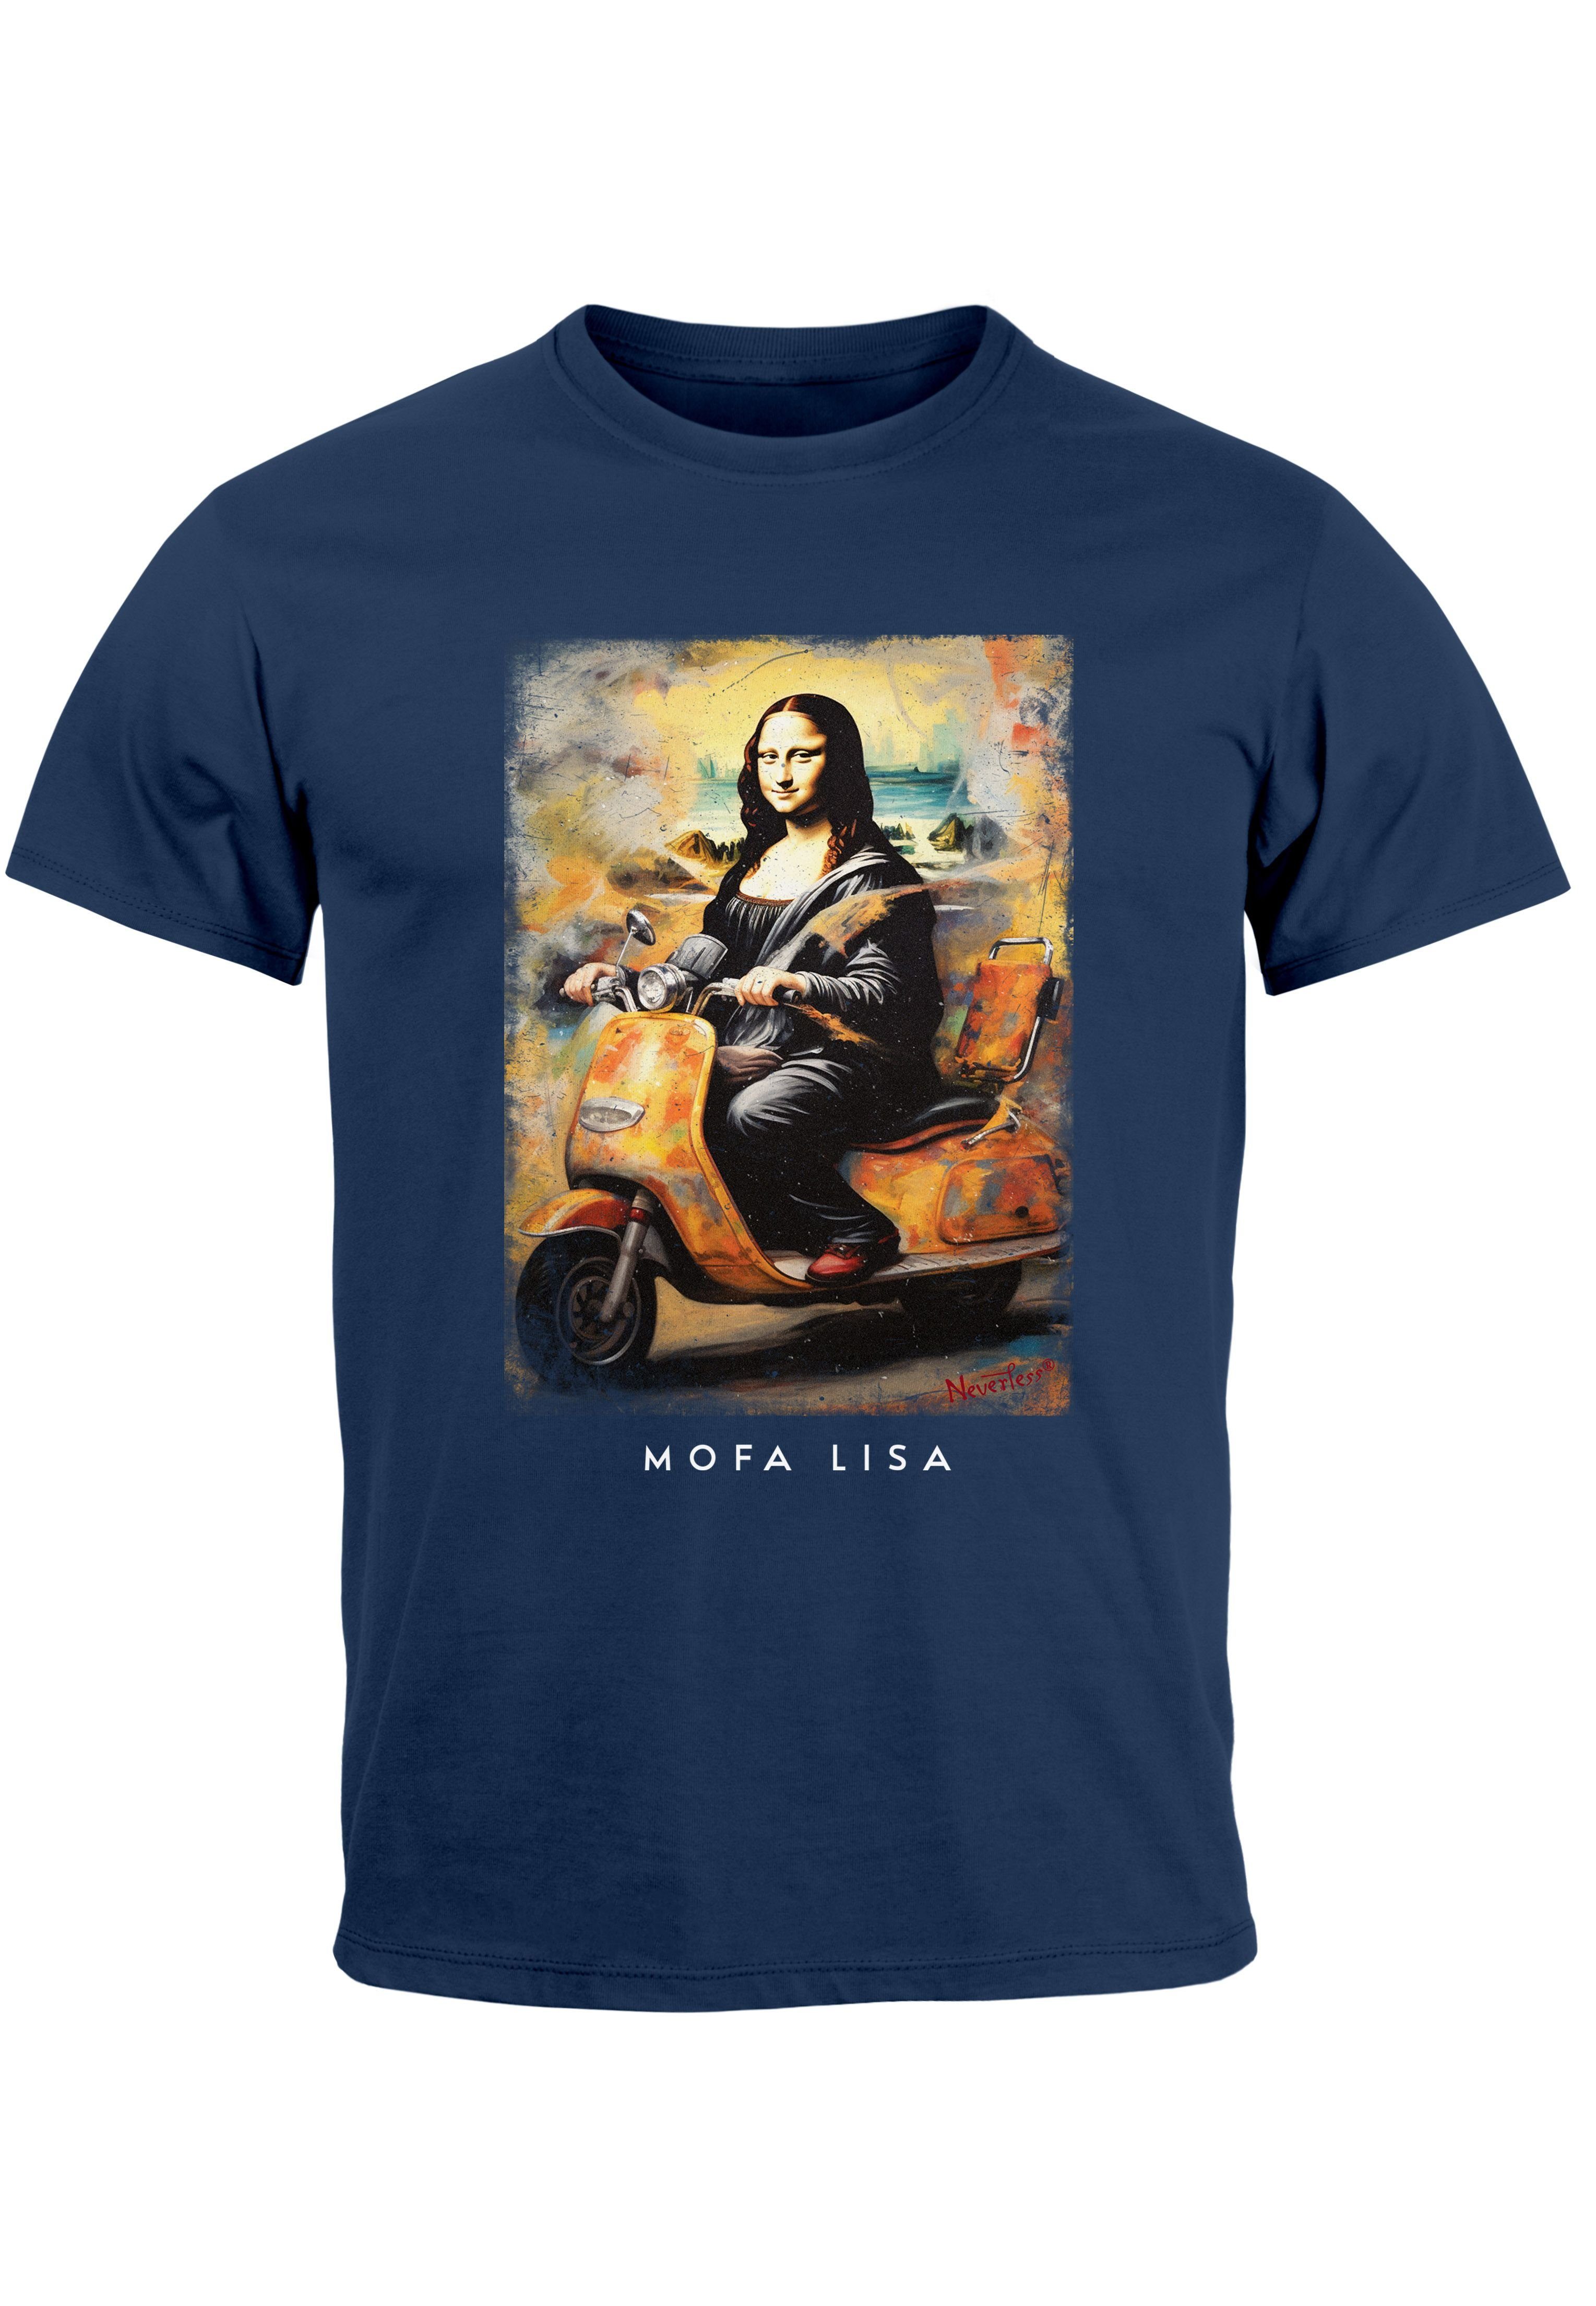 MoonWorks Print-Shirt Herren T-Shirt Print Aufdruck Mona Lisa Parodie Meme Kapuzen-Pullover mit Print Mofa Lisa navy